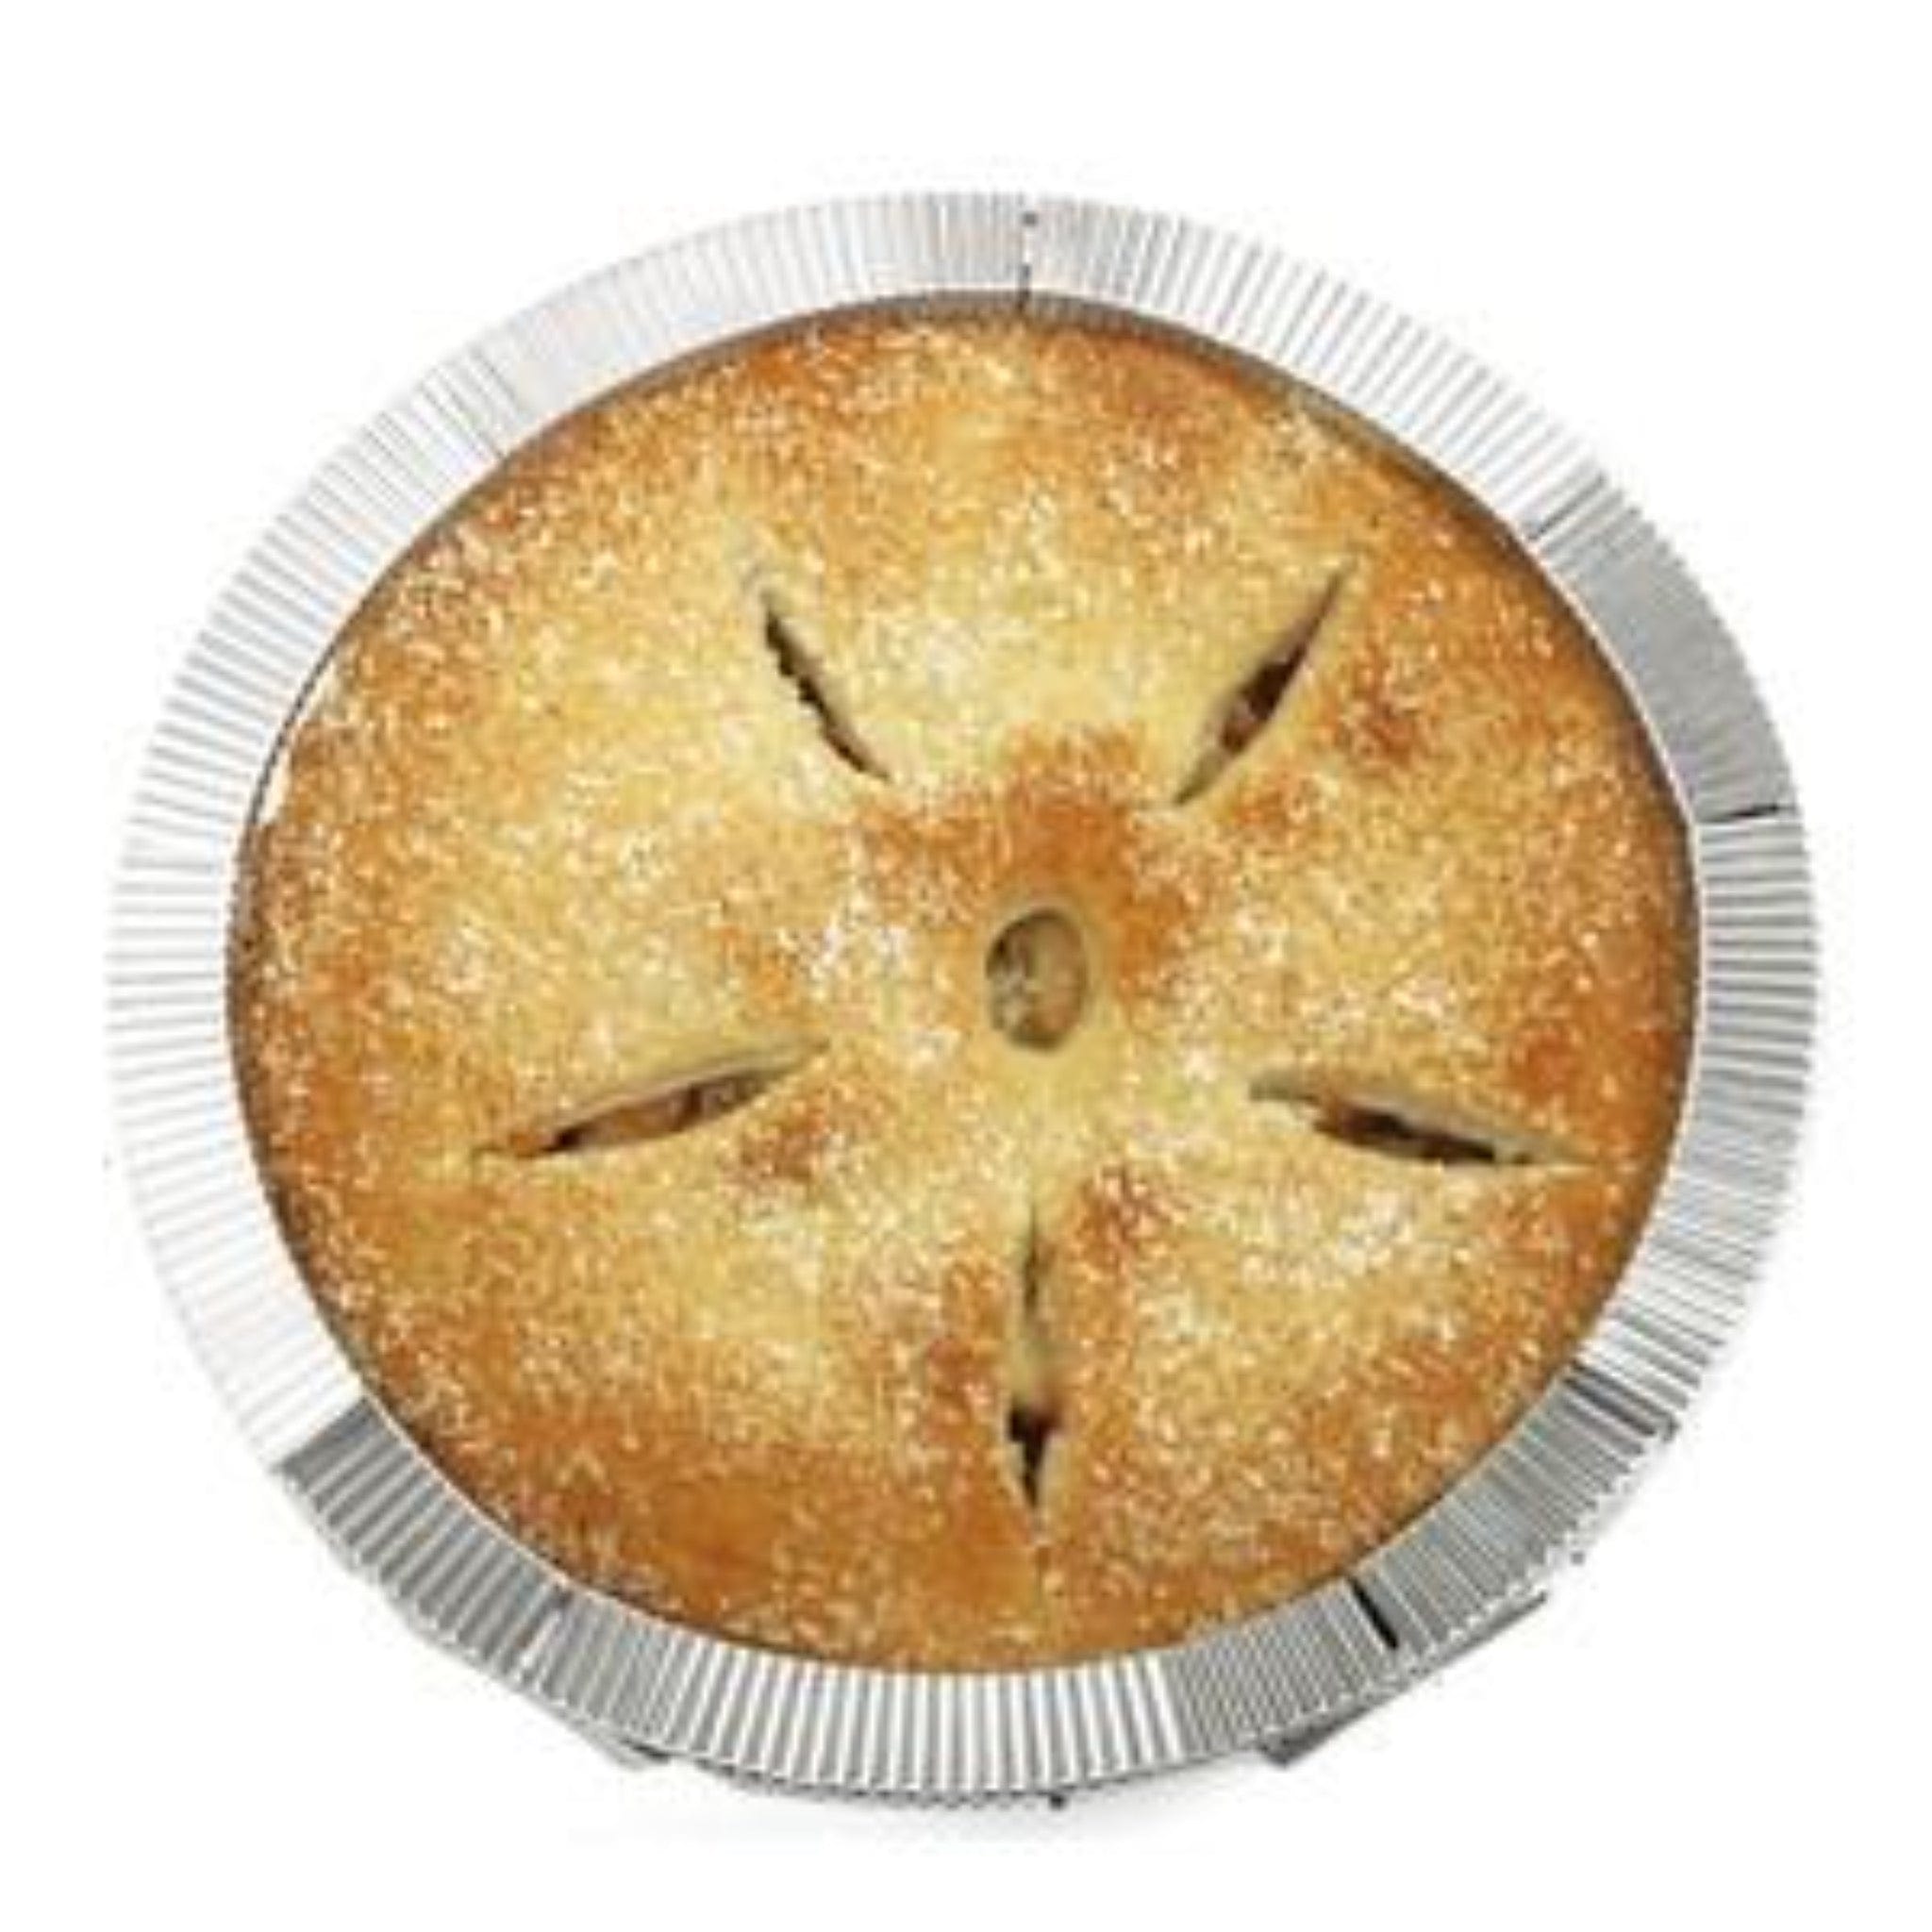 Norpro Pie Crust Shields- 5 pc. set